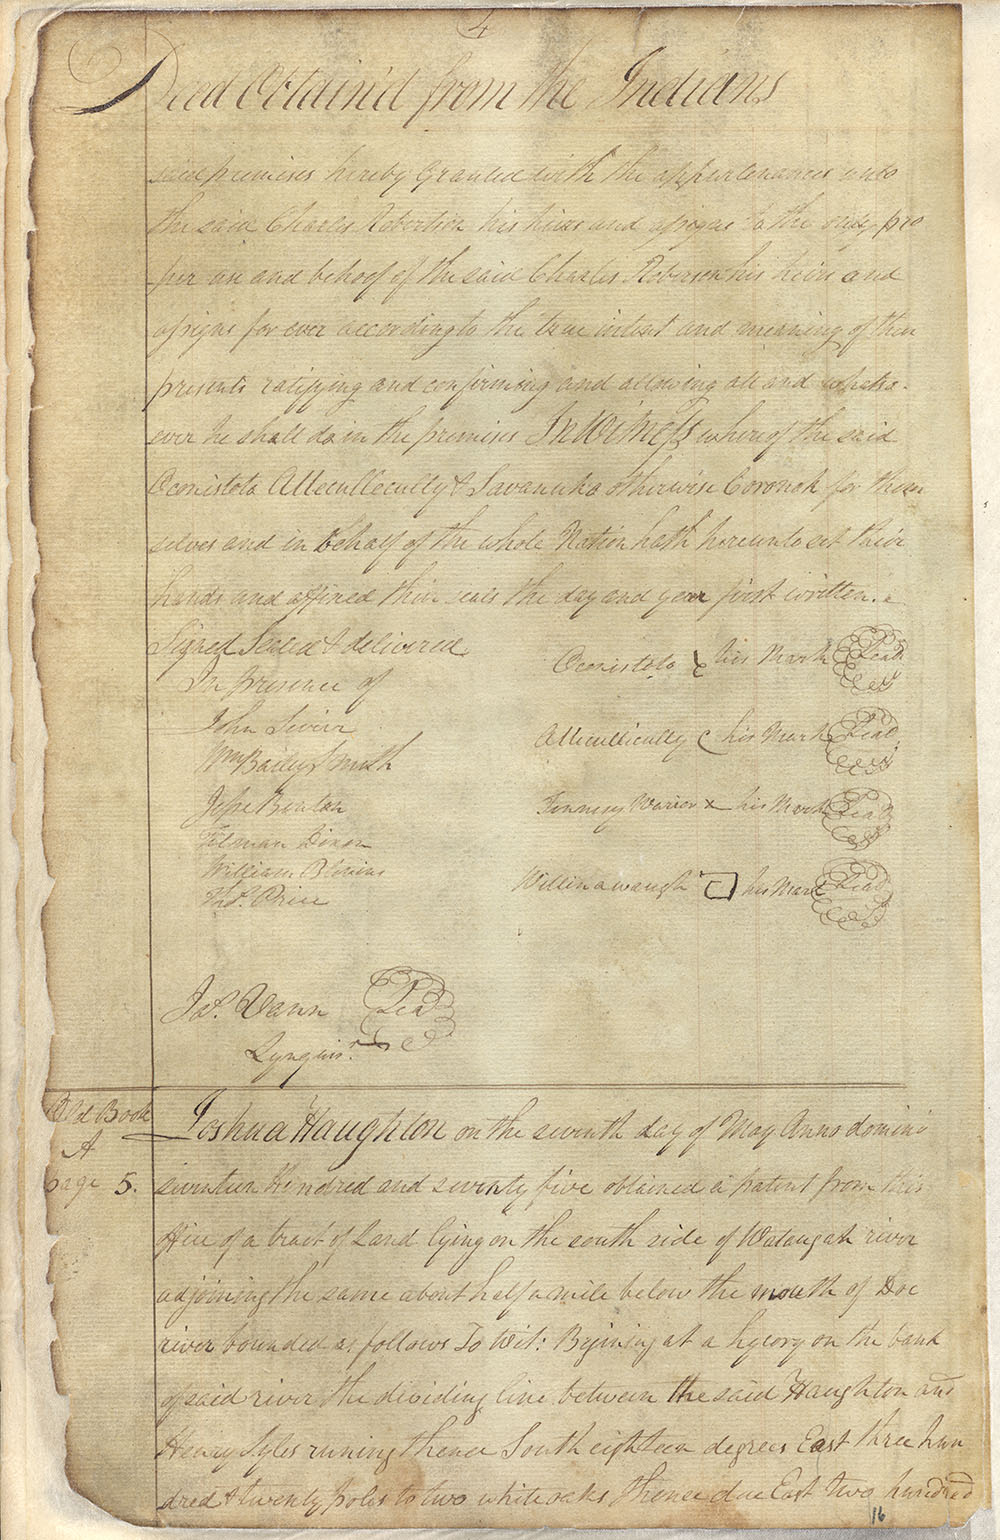 Great Cherokee leaders such as Oconostota and Attakullakulla signed the Watauga Purchase.